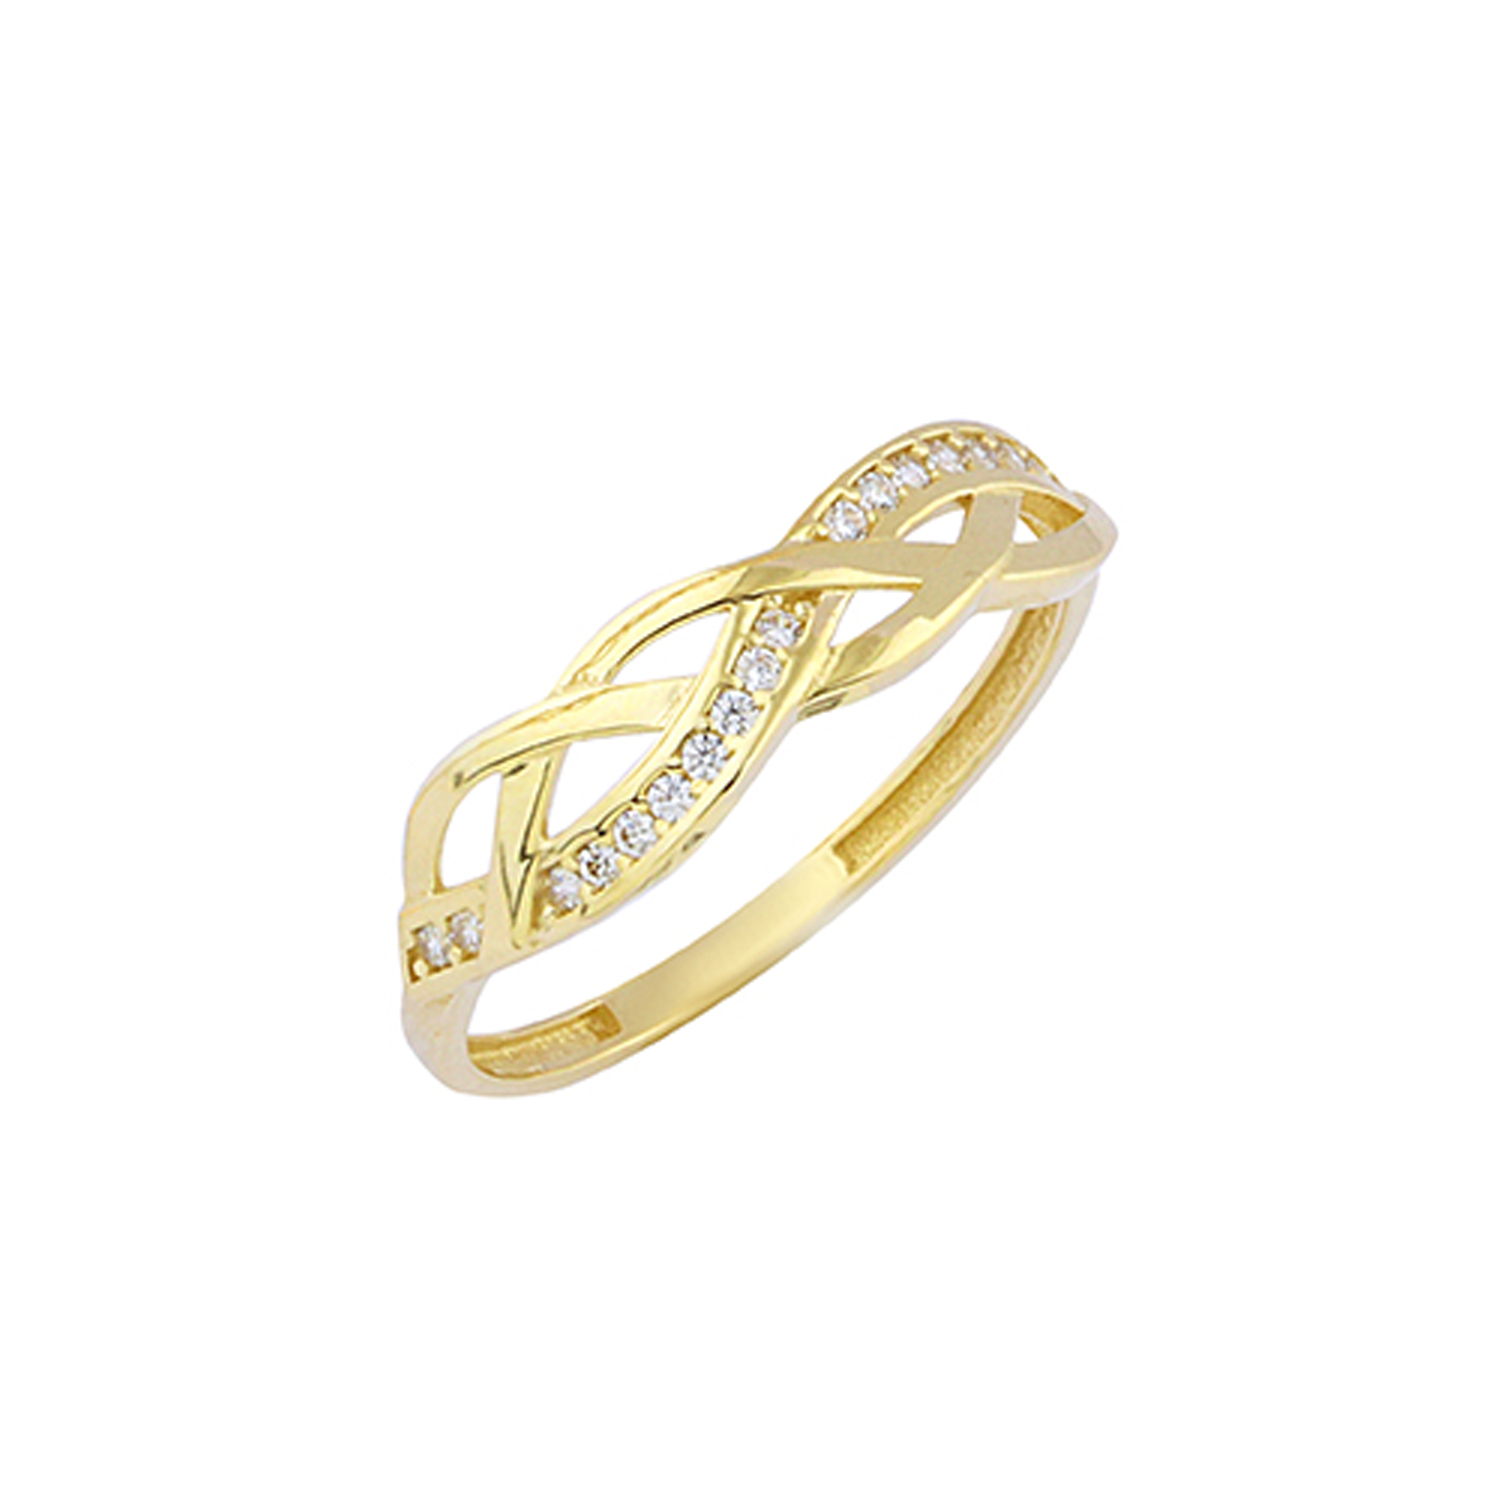 MOISS Moiss prsten ze žlutého zlata LEONIDA RA000774 Velikost 56 mm RA000776 + doprava ZDARMA